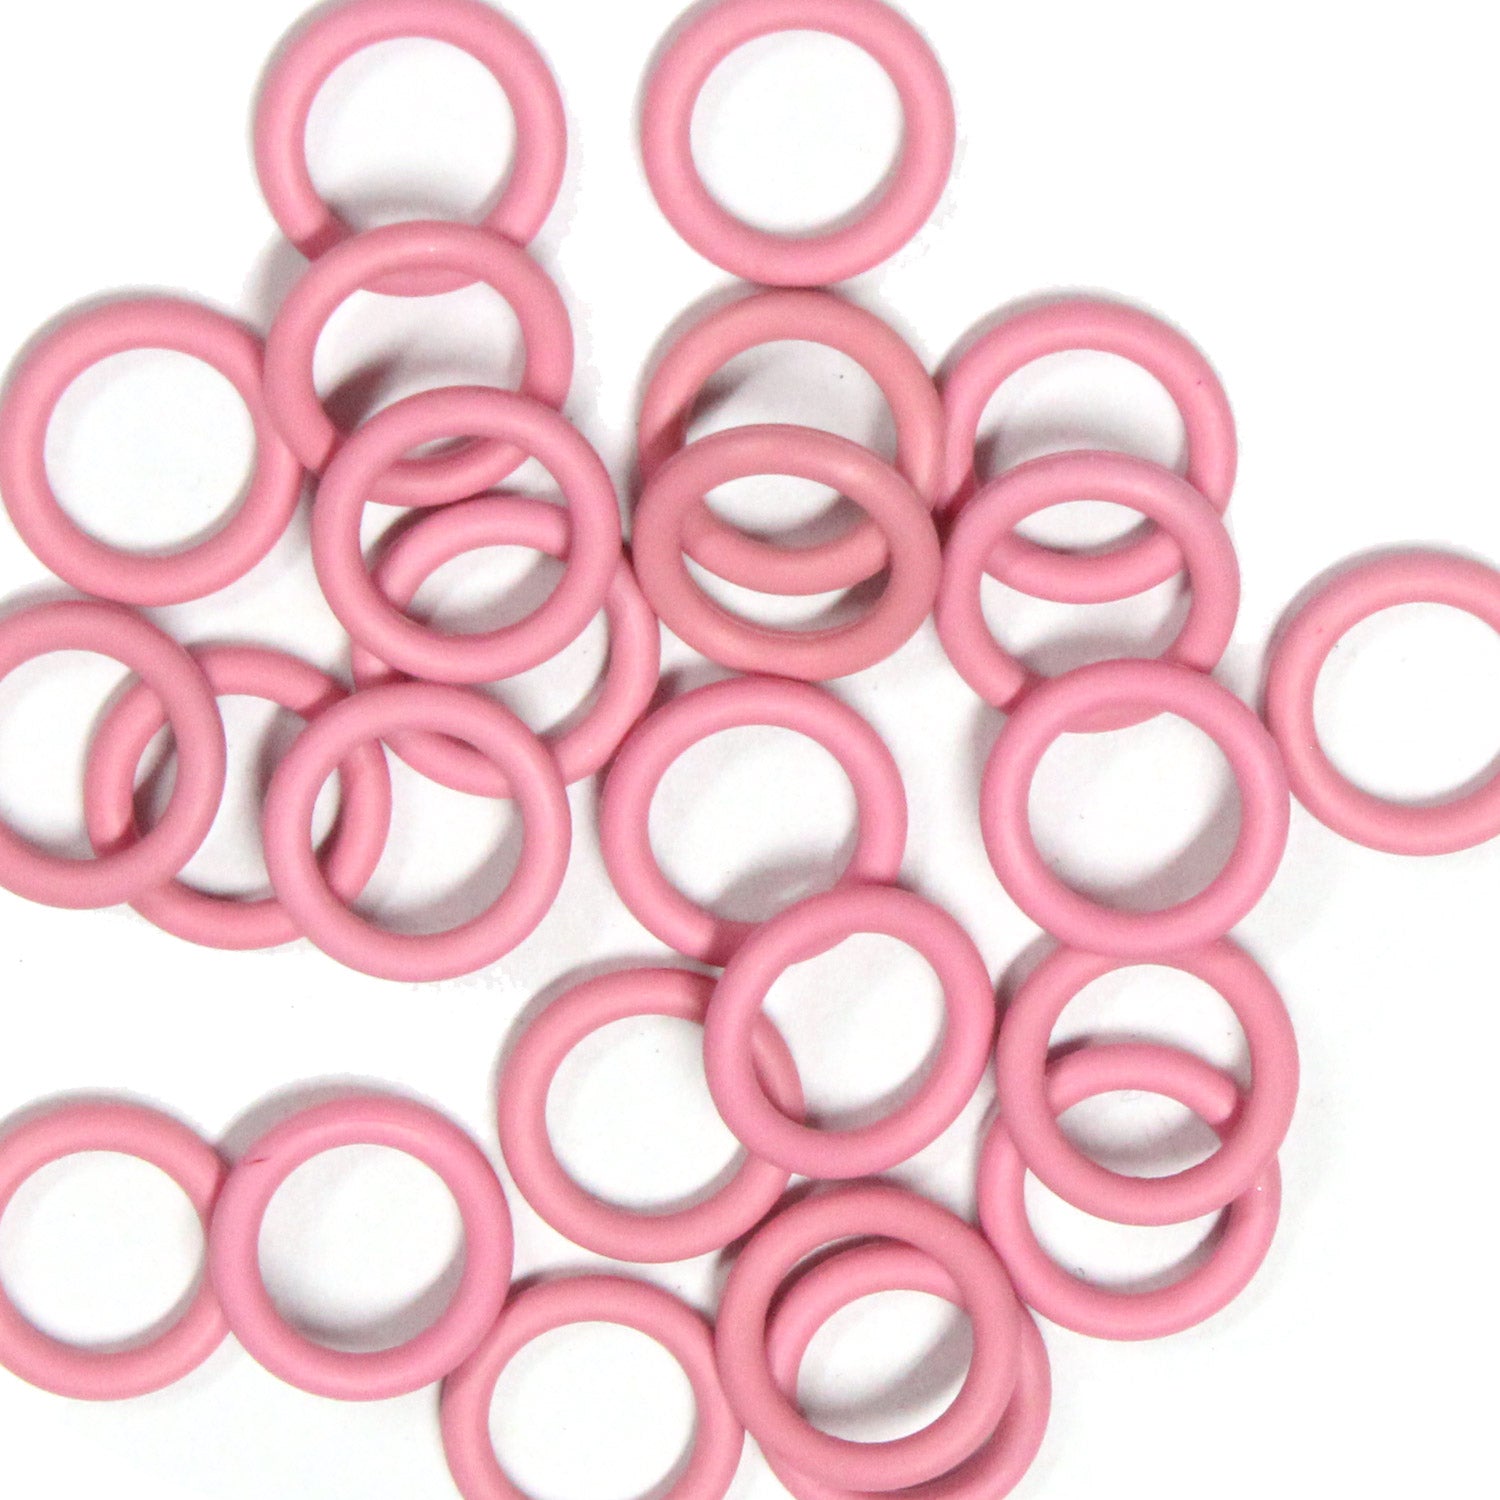 Rubber Rings